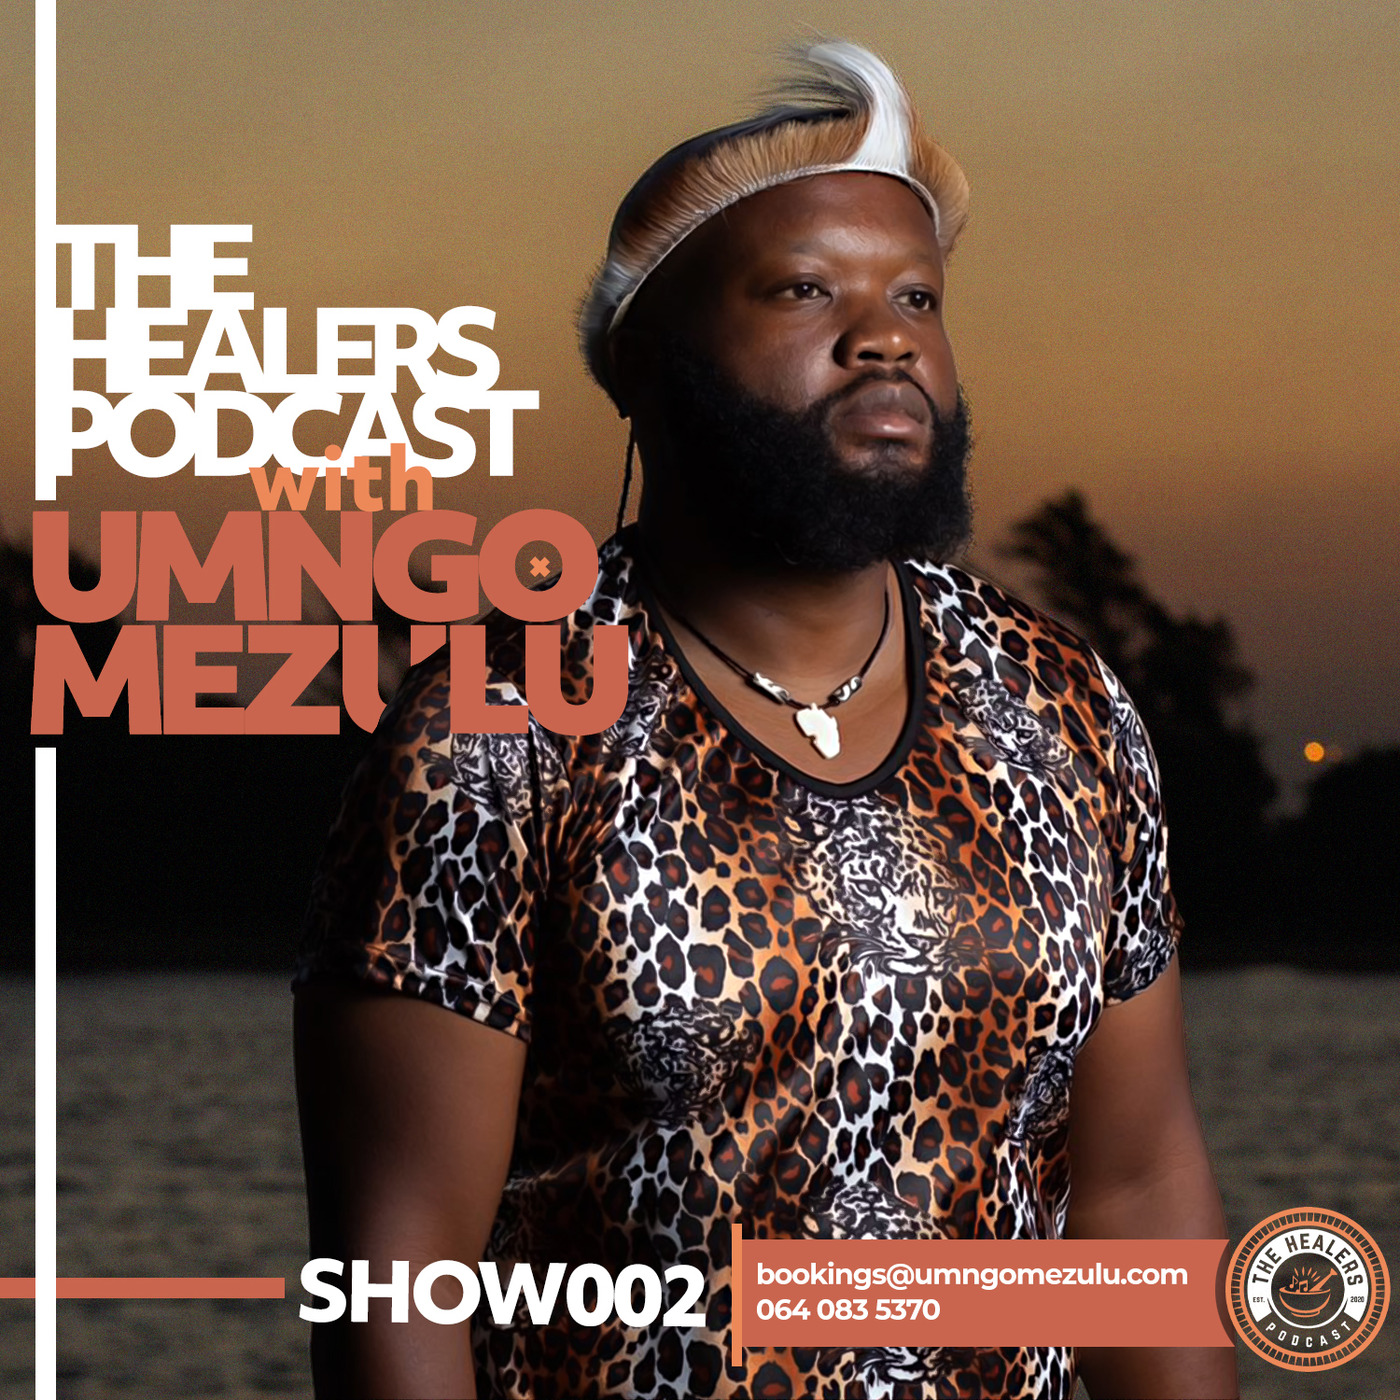 “Show 002” The Healers Podcast With UMngomezulu